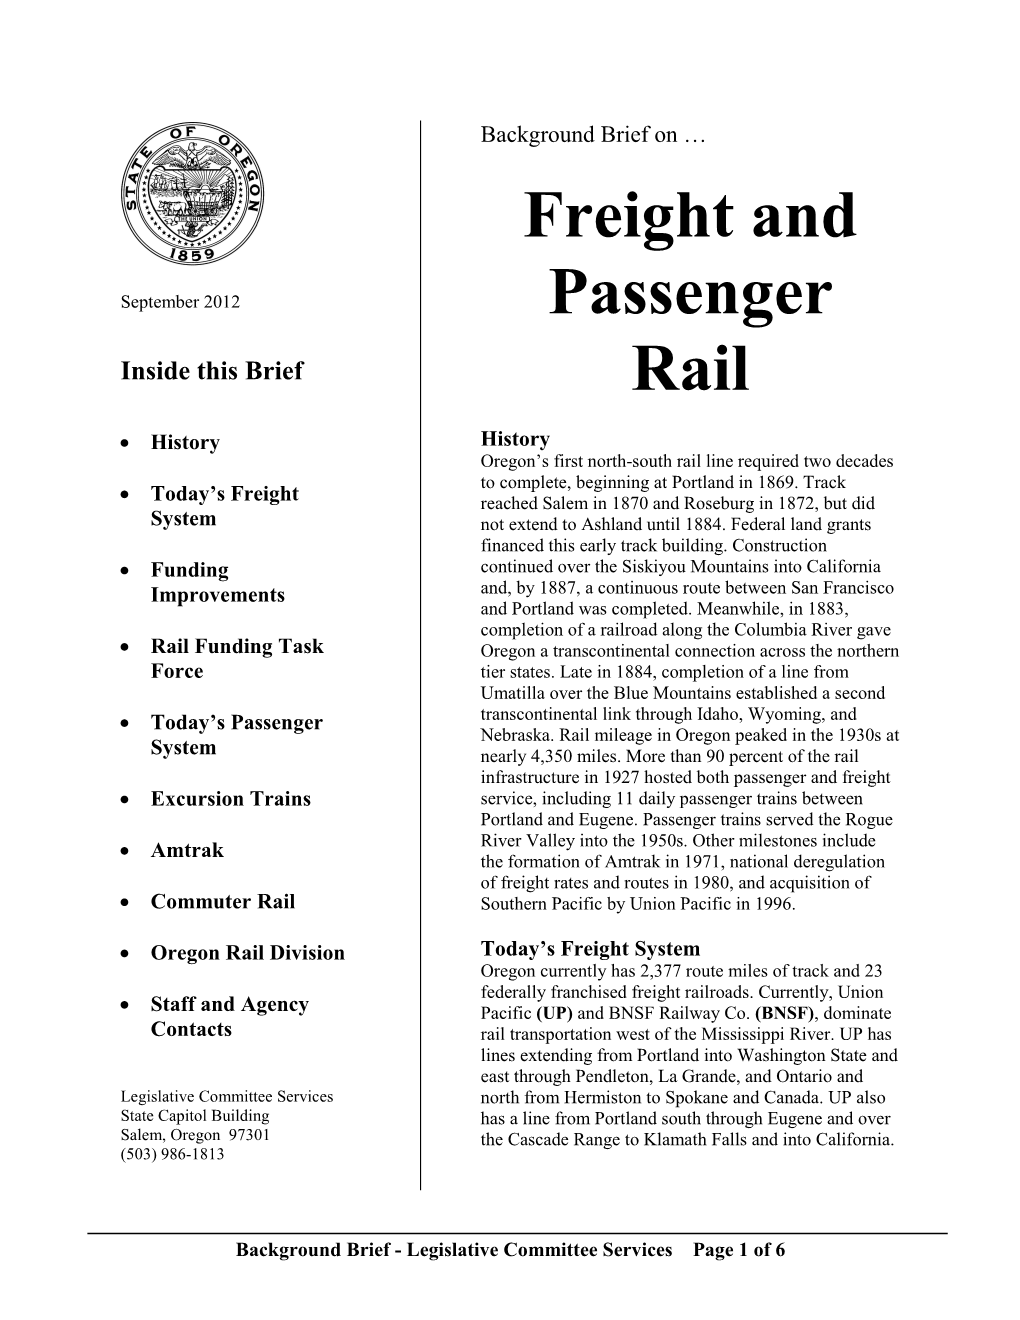 Freight and Passenger Rail